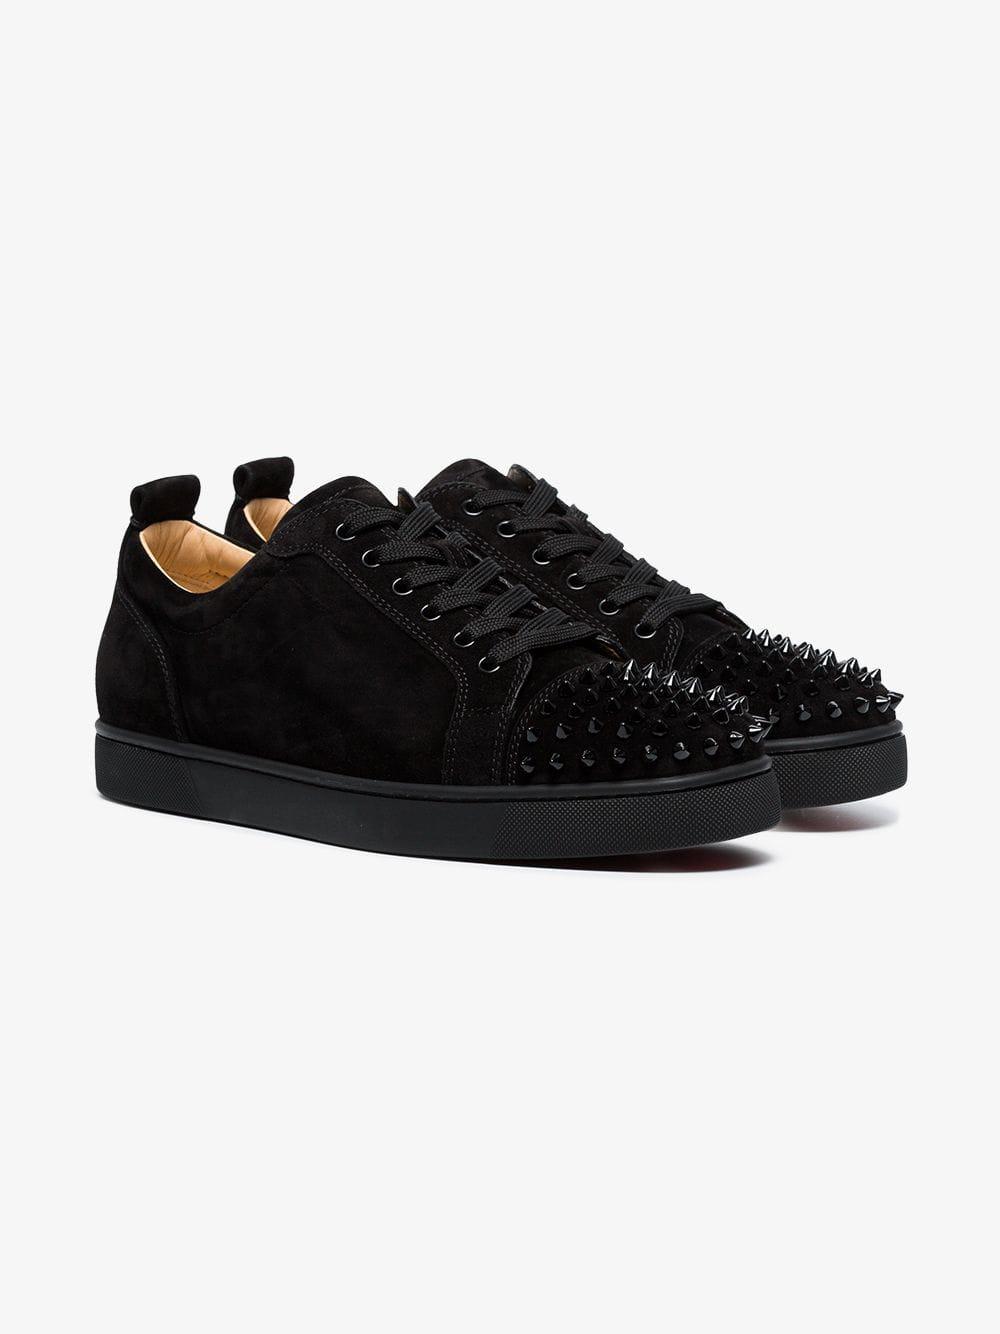 Christian Louboutin Black Leather Louis Junior Spike Sneakers in Black ...